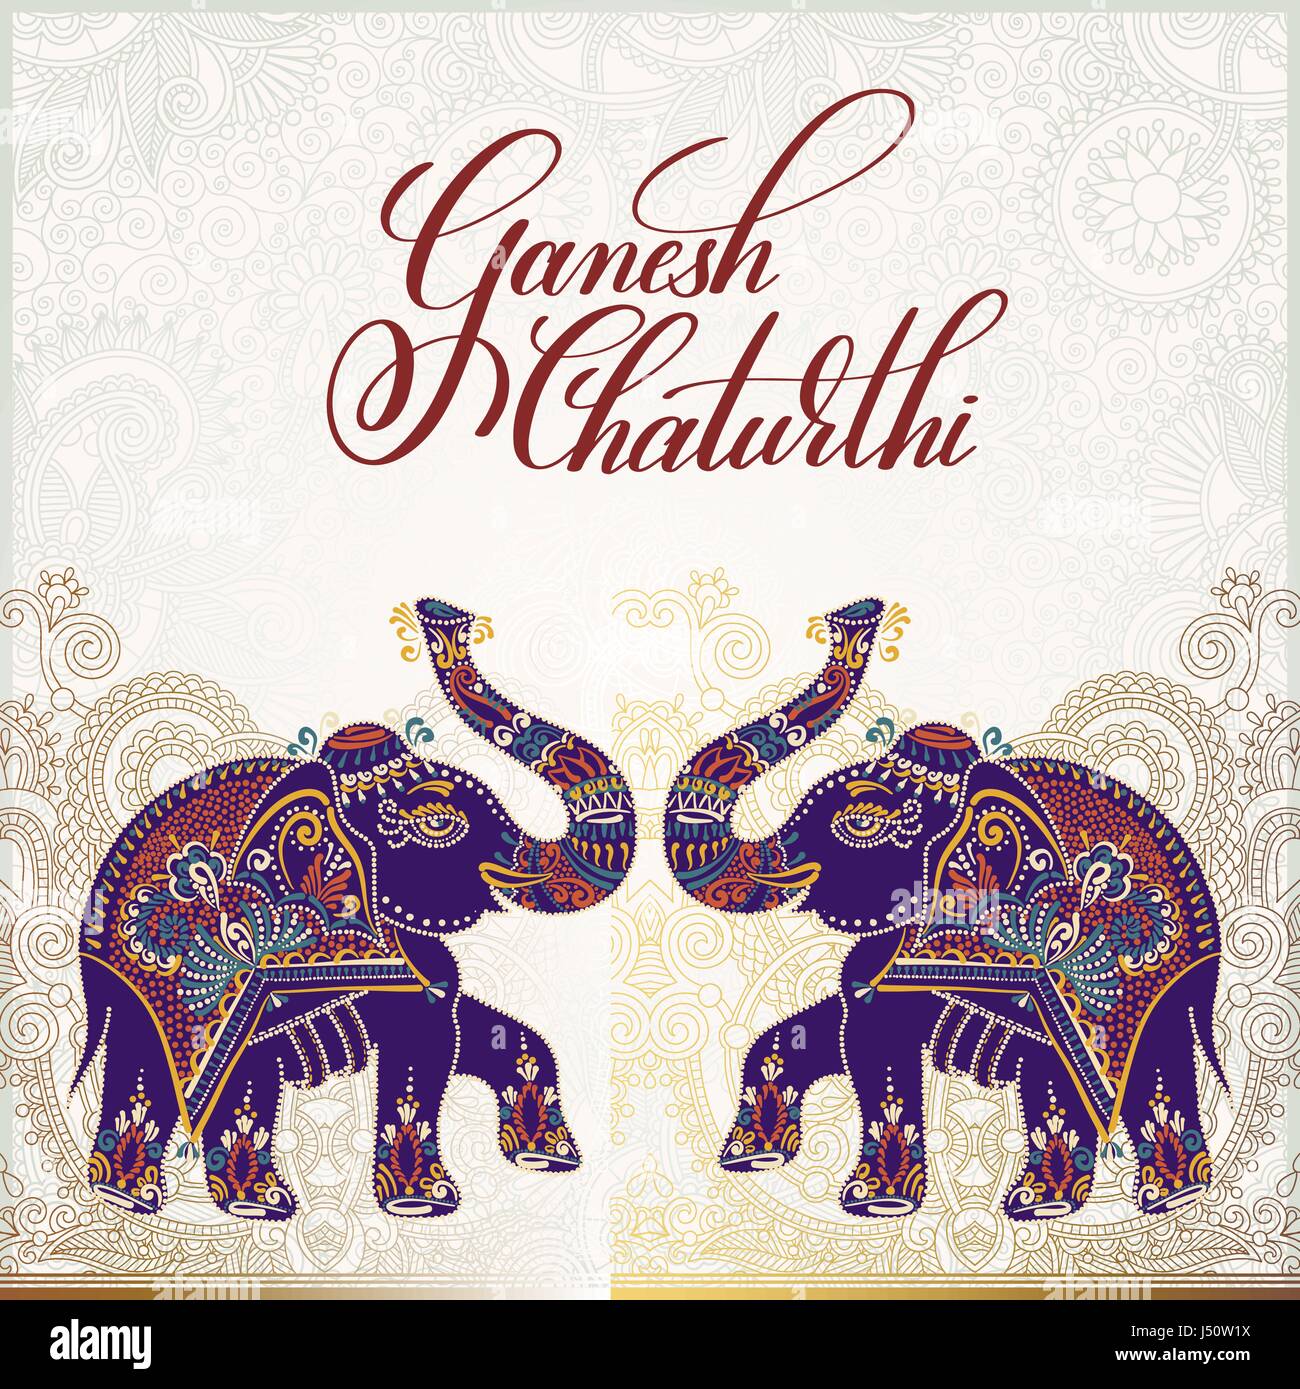 Ganesh chaturthi greeting card design con due elephant Illustrazione Vettoriale